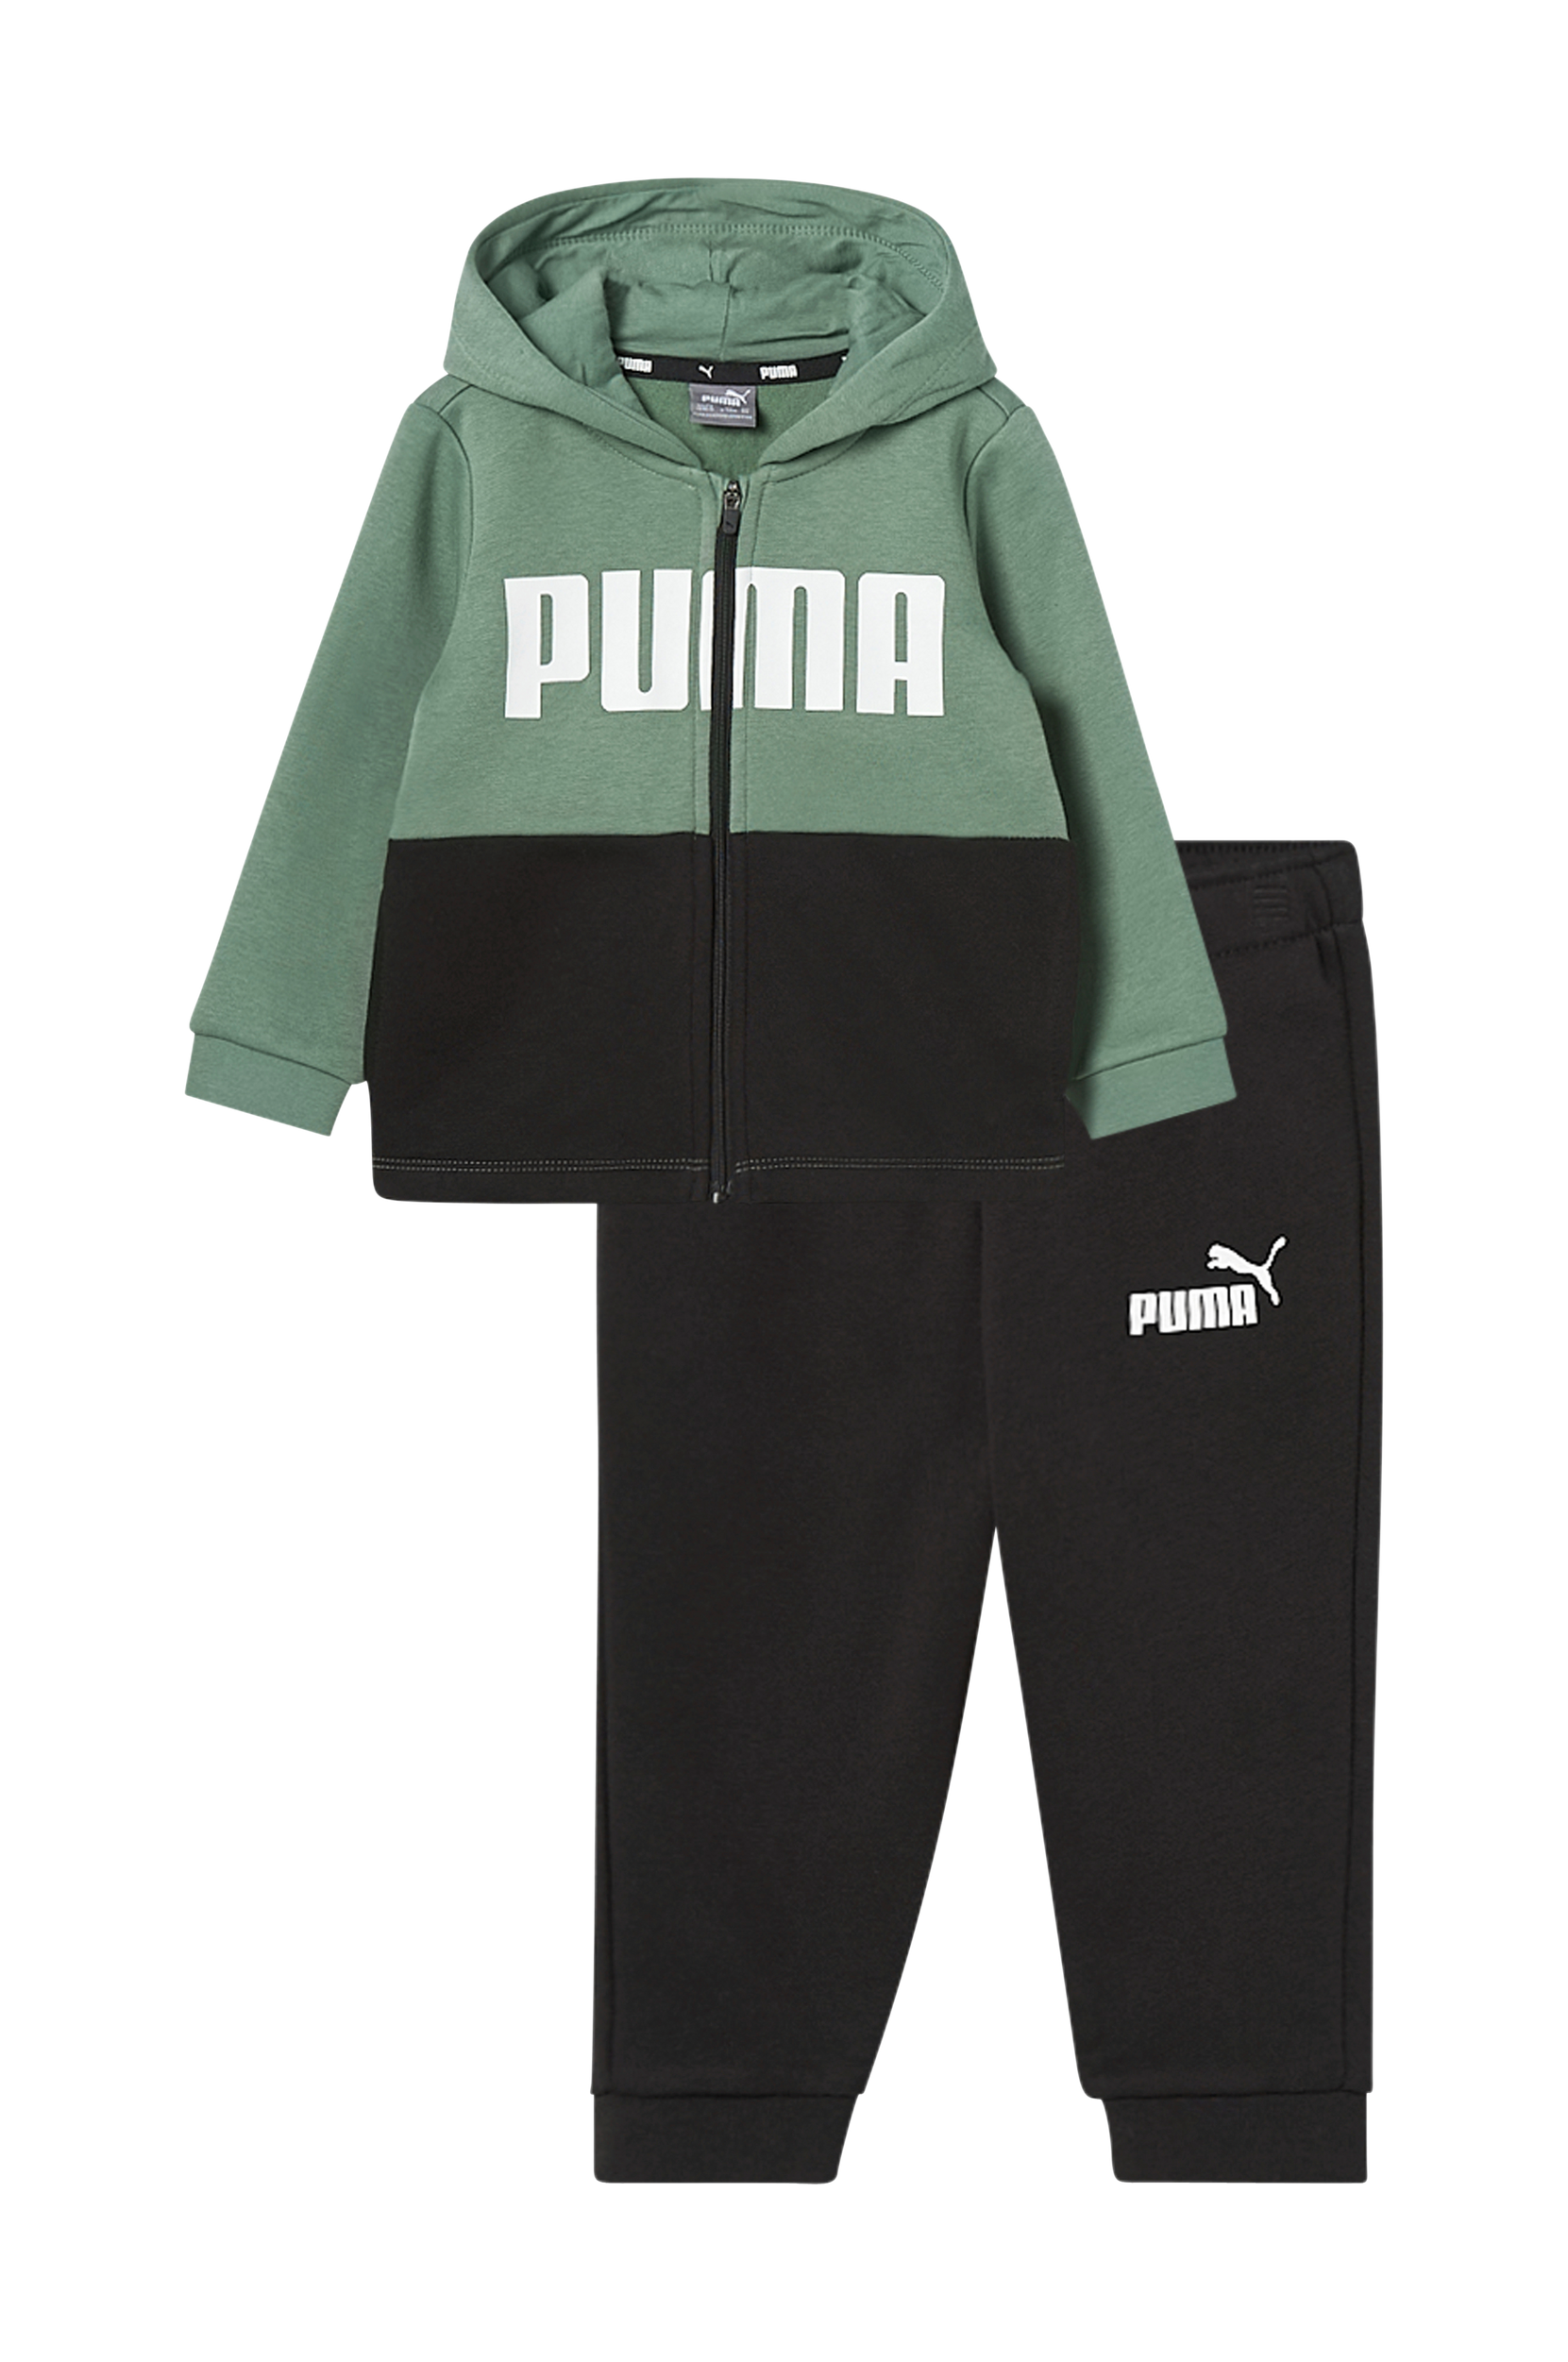 Puma - Sett Minicats Colorblock Jogger FL, hettejakke og sweatpants - Grønn - 74